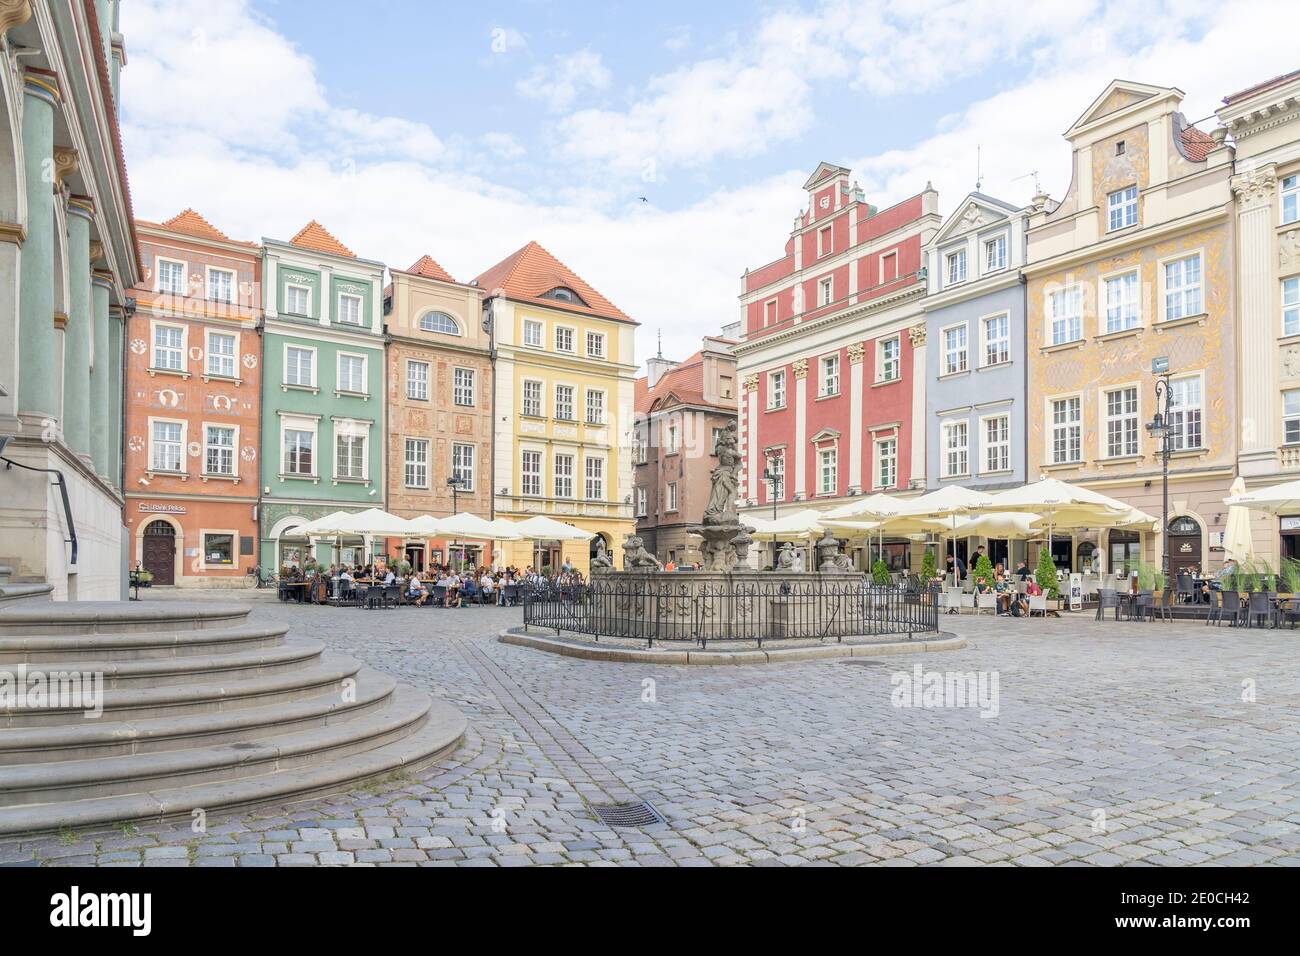 Fountain of Proserpina, Old Town Square, Poznan, Poland, Europe Stock Photo